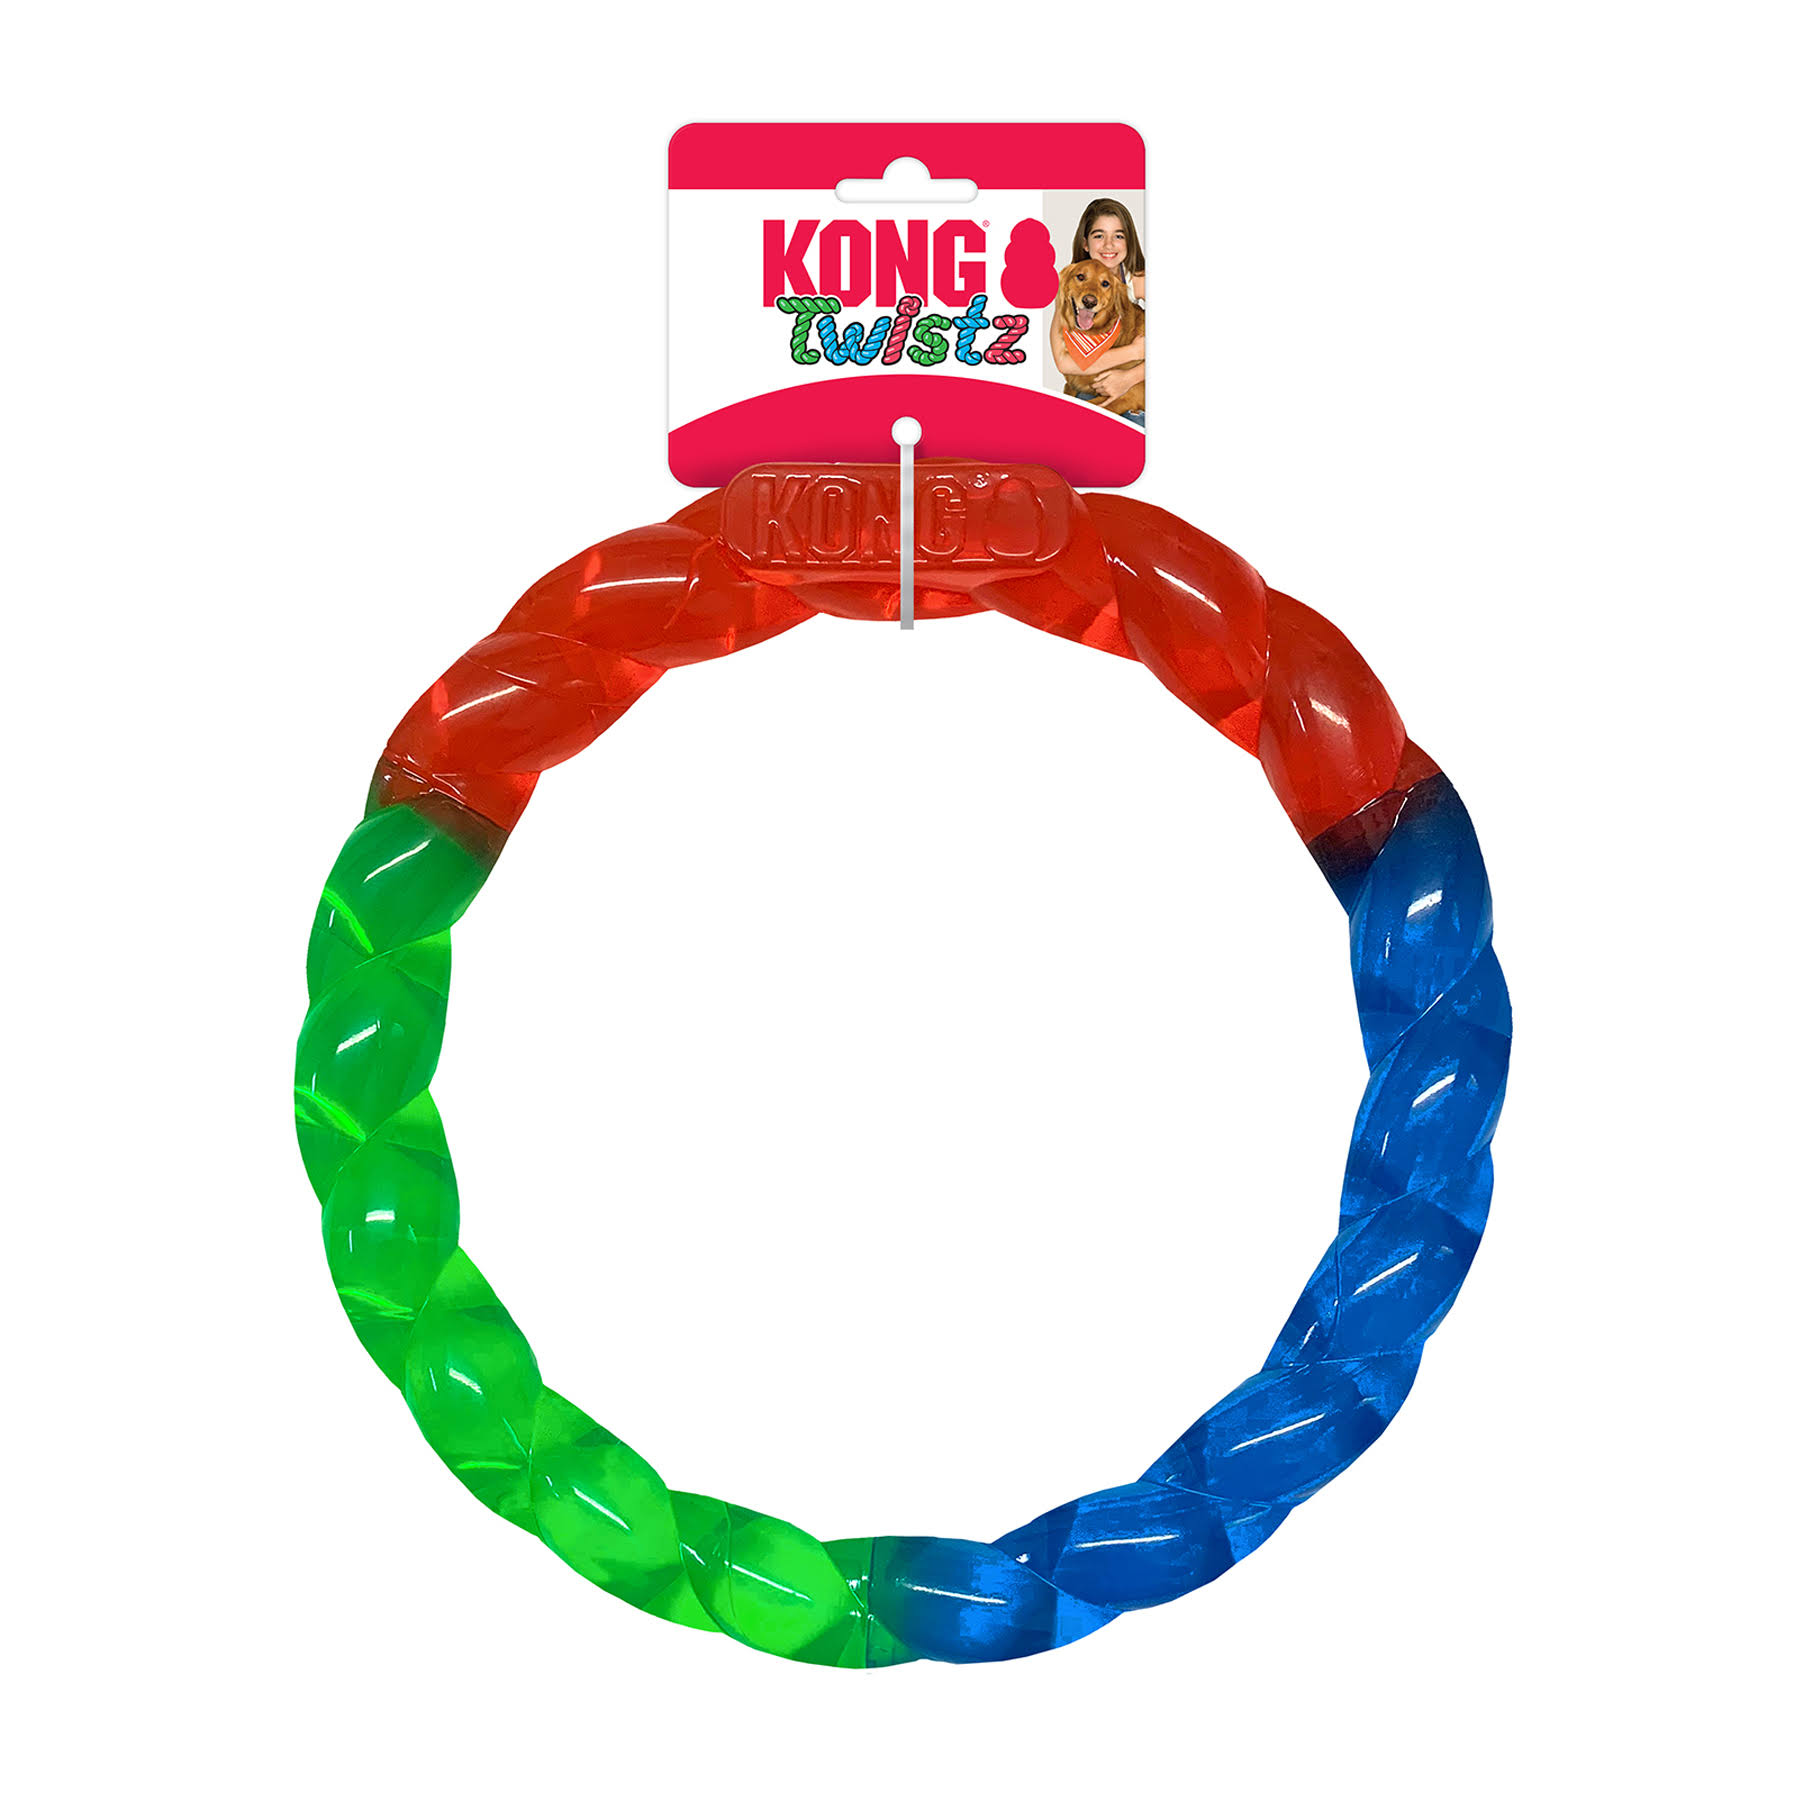 KONG Twistz Ring Small Dog Toy